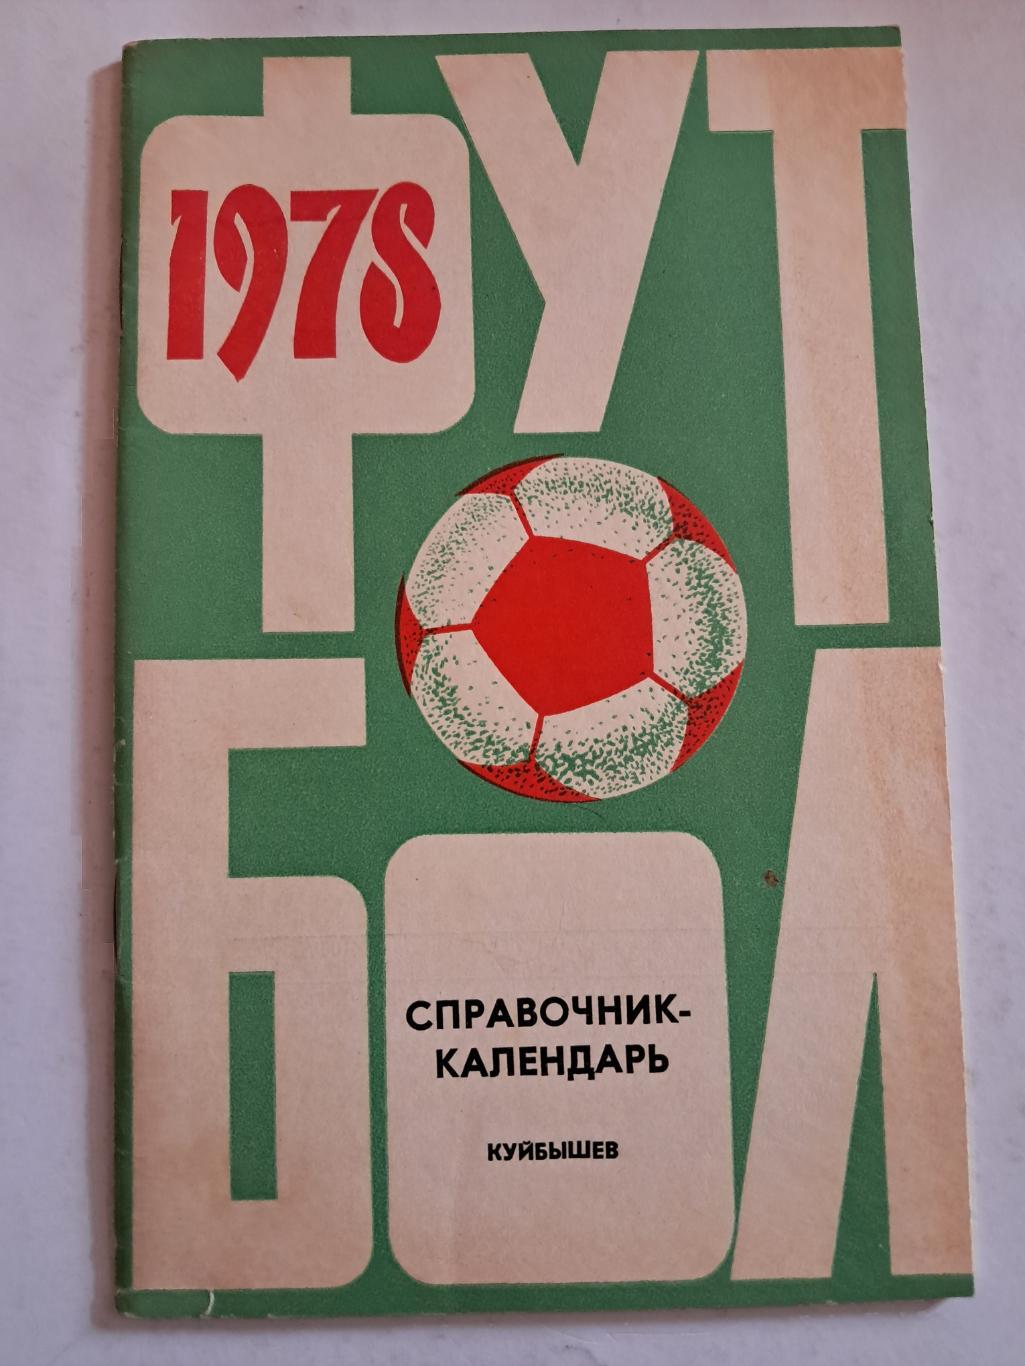 Календарь-справочник по футболу 1978 Куйбышев